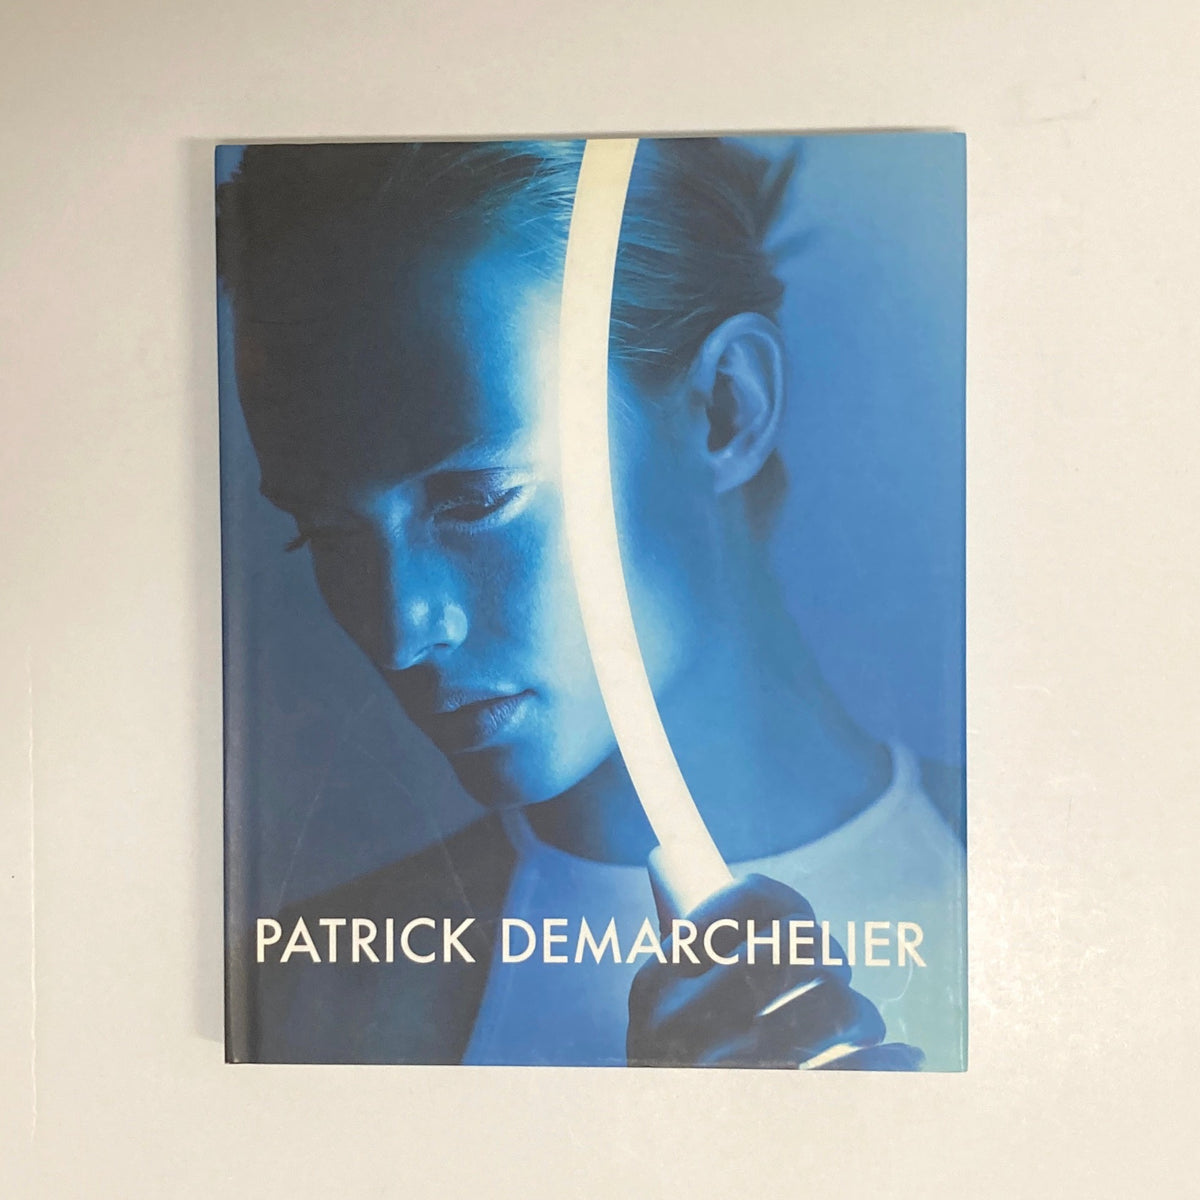 Demarchelier Patrick - Patrick Demarchelier: Exposing Elegance 